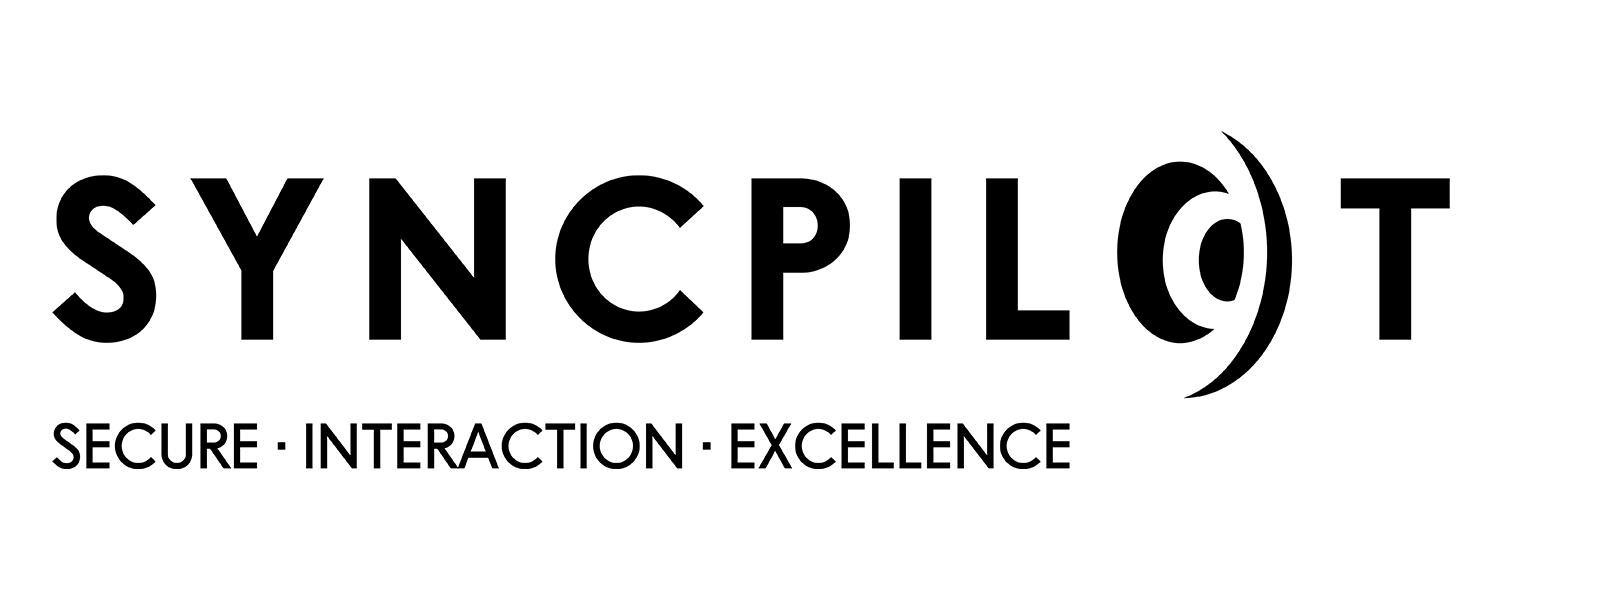 Syncpilot logo